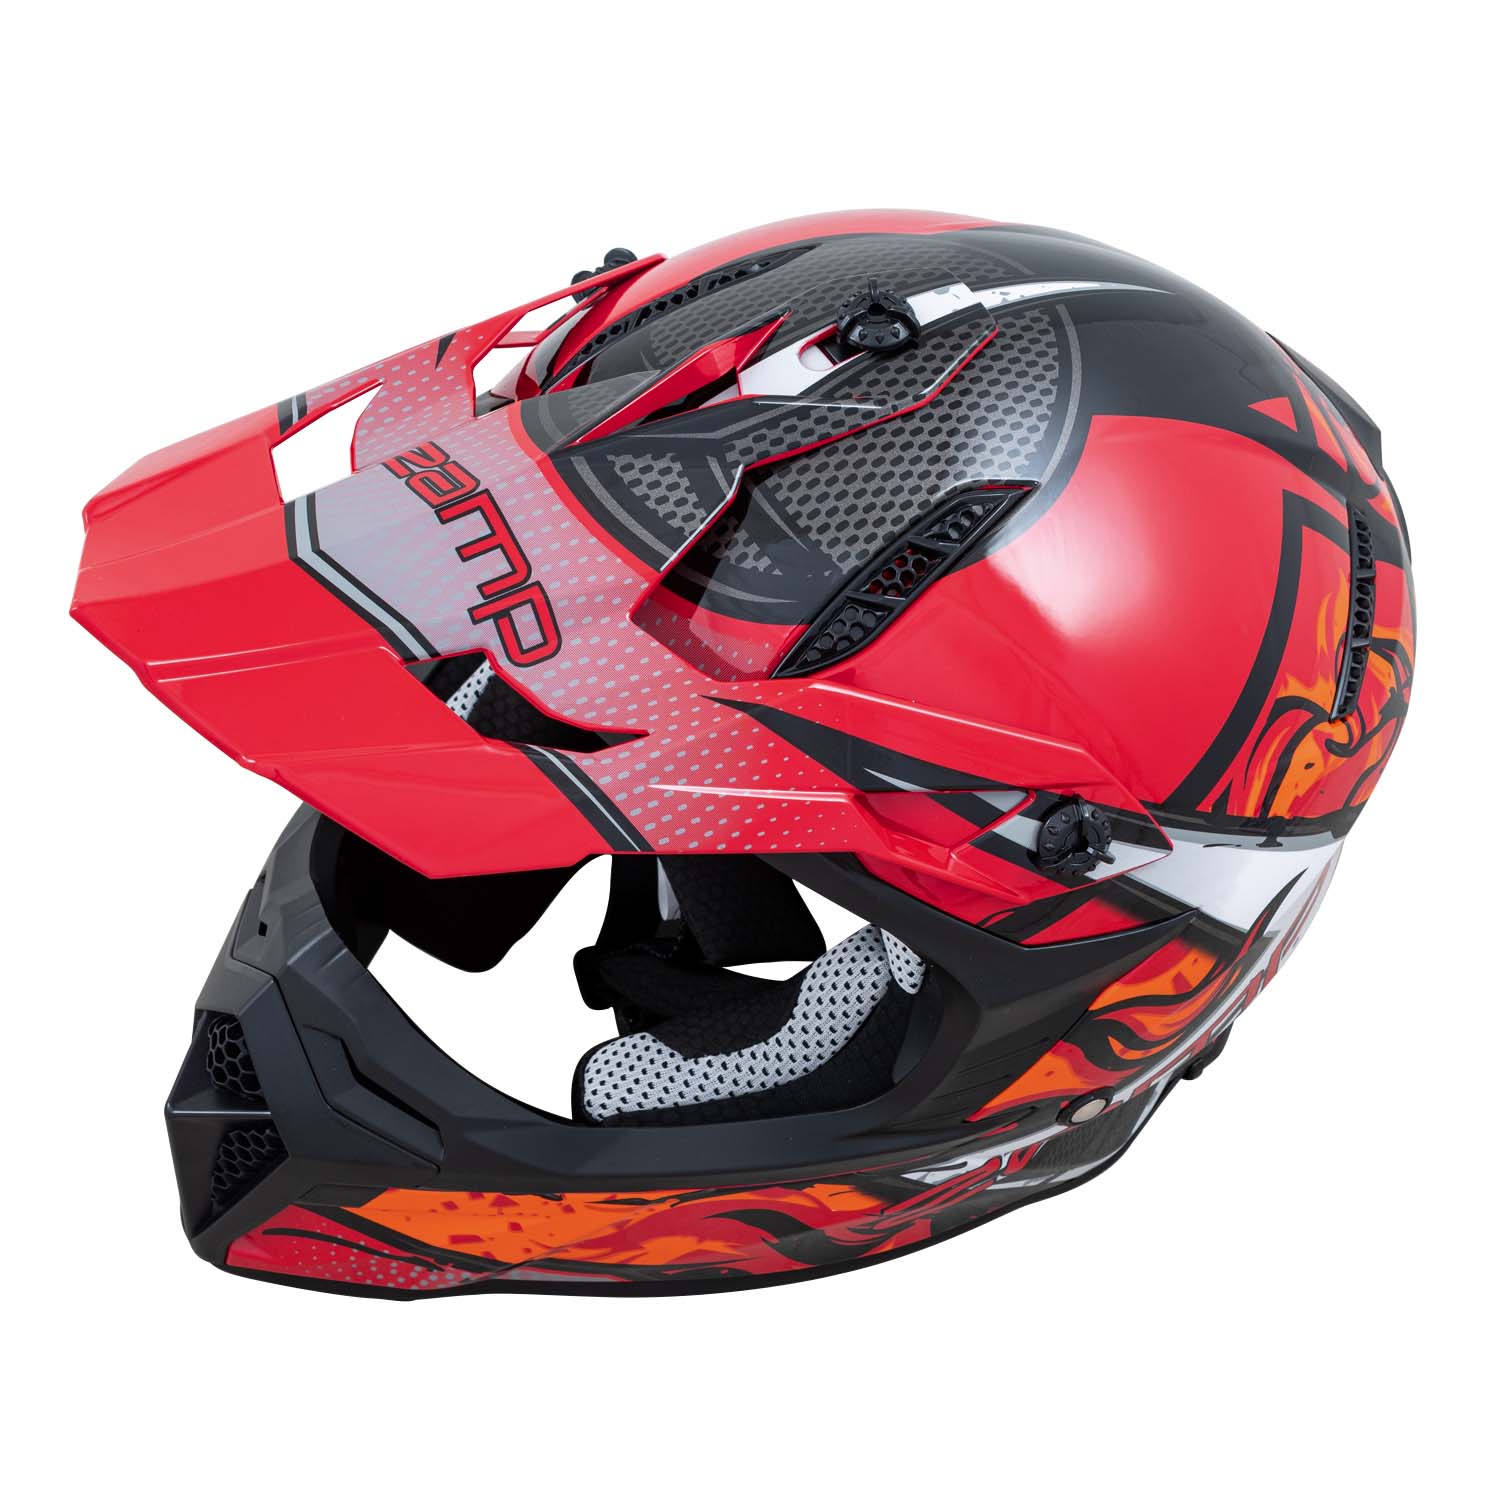 Zamp FX-4 Graphic Helmet, ECE22.05 & DOT